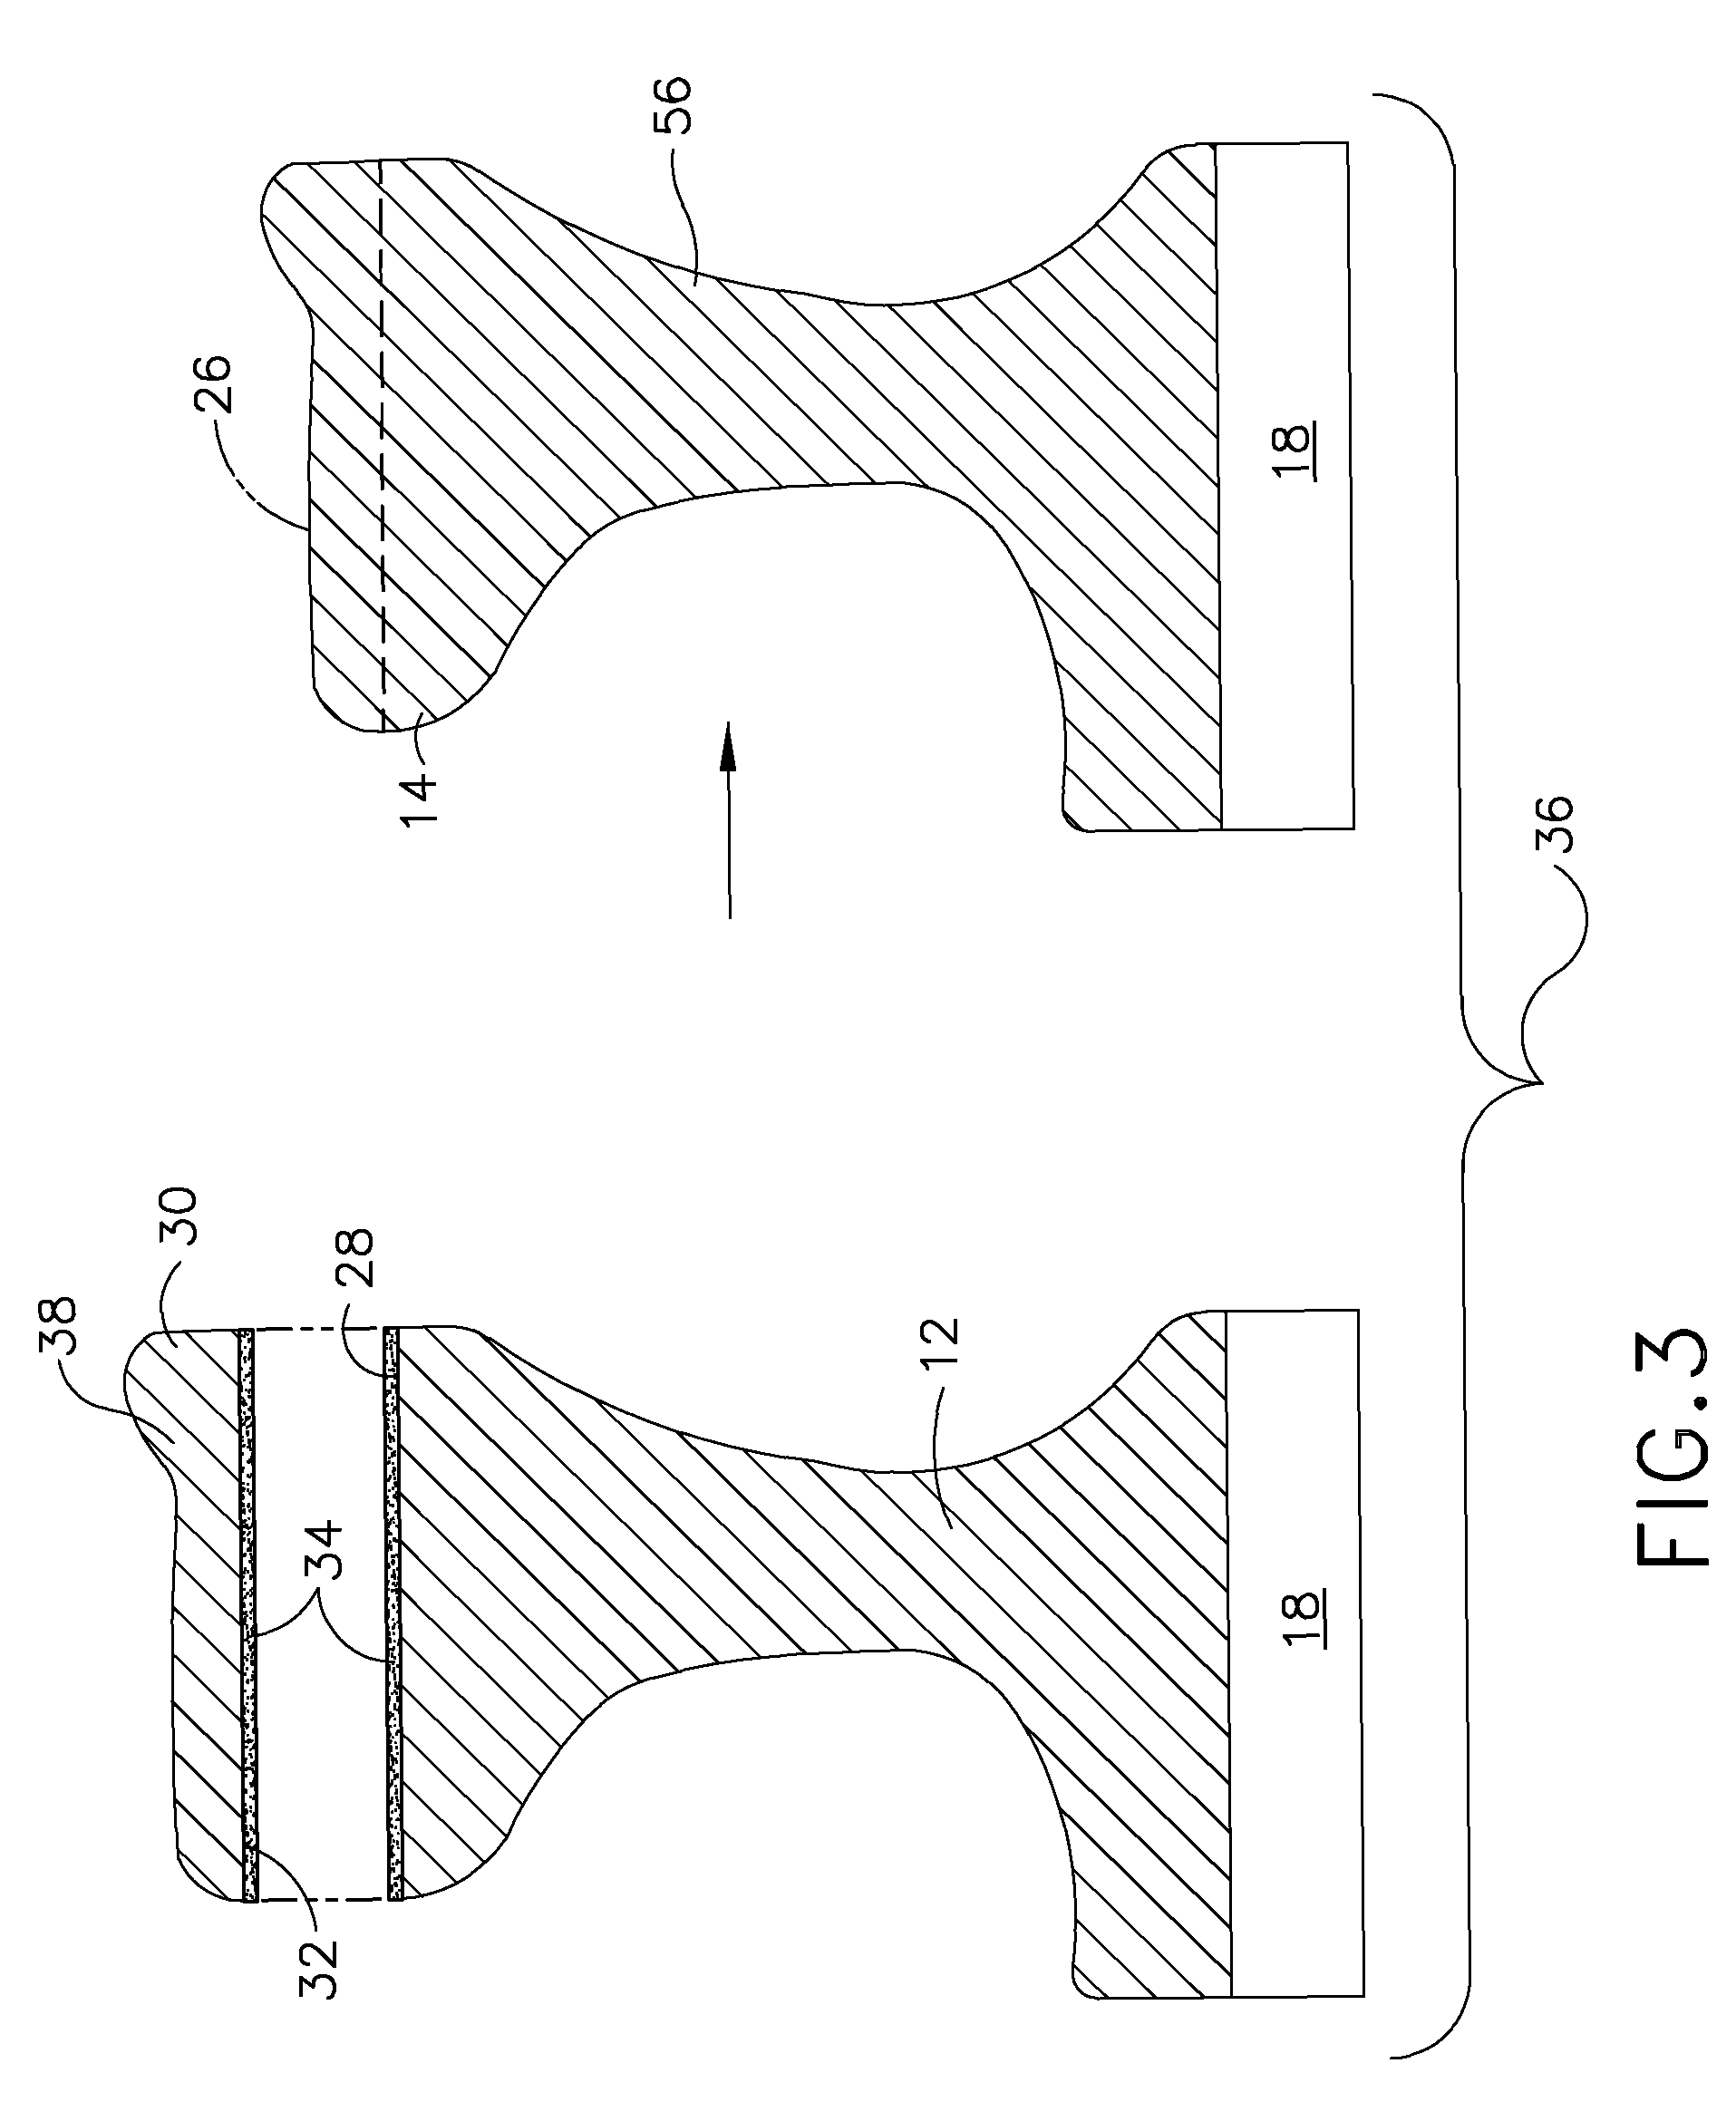 Method for repair of rail wheels